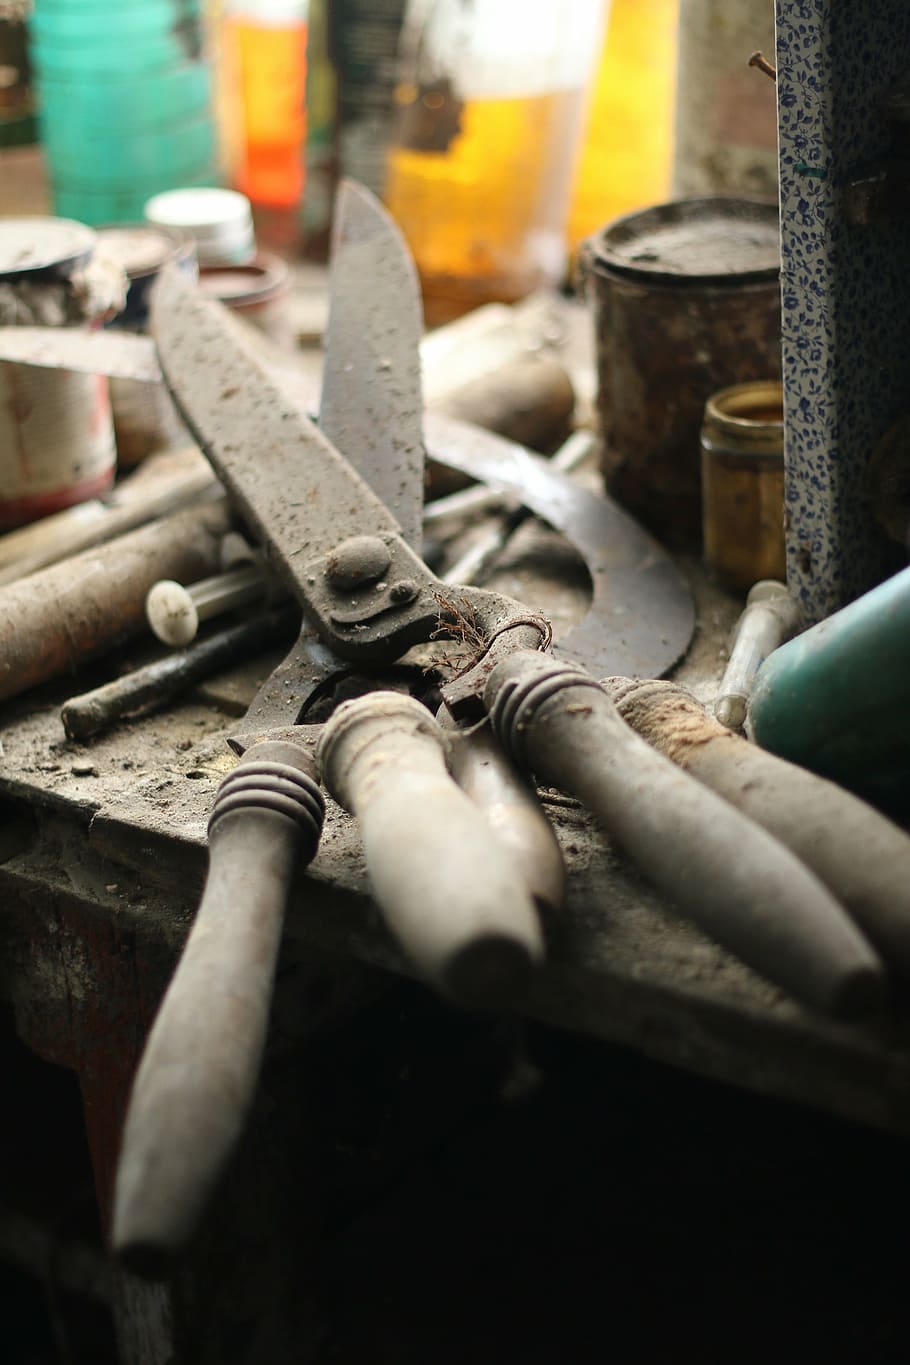 shear, former, old, tools, flea market, rustic, metal, industry, close-up, work tool